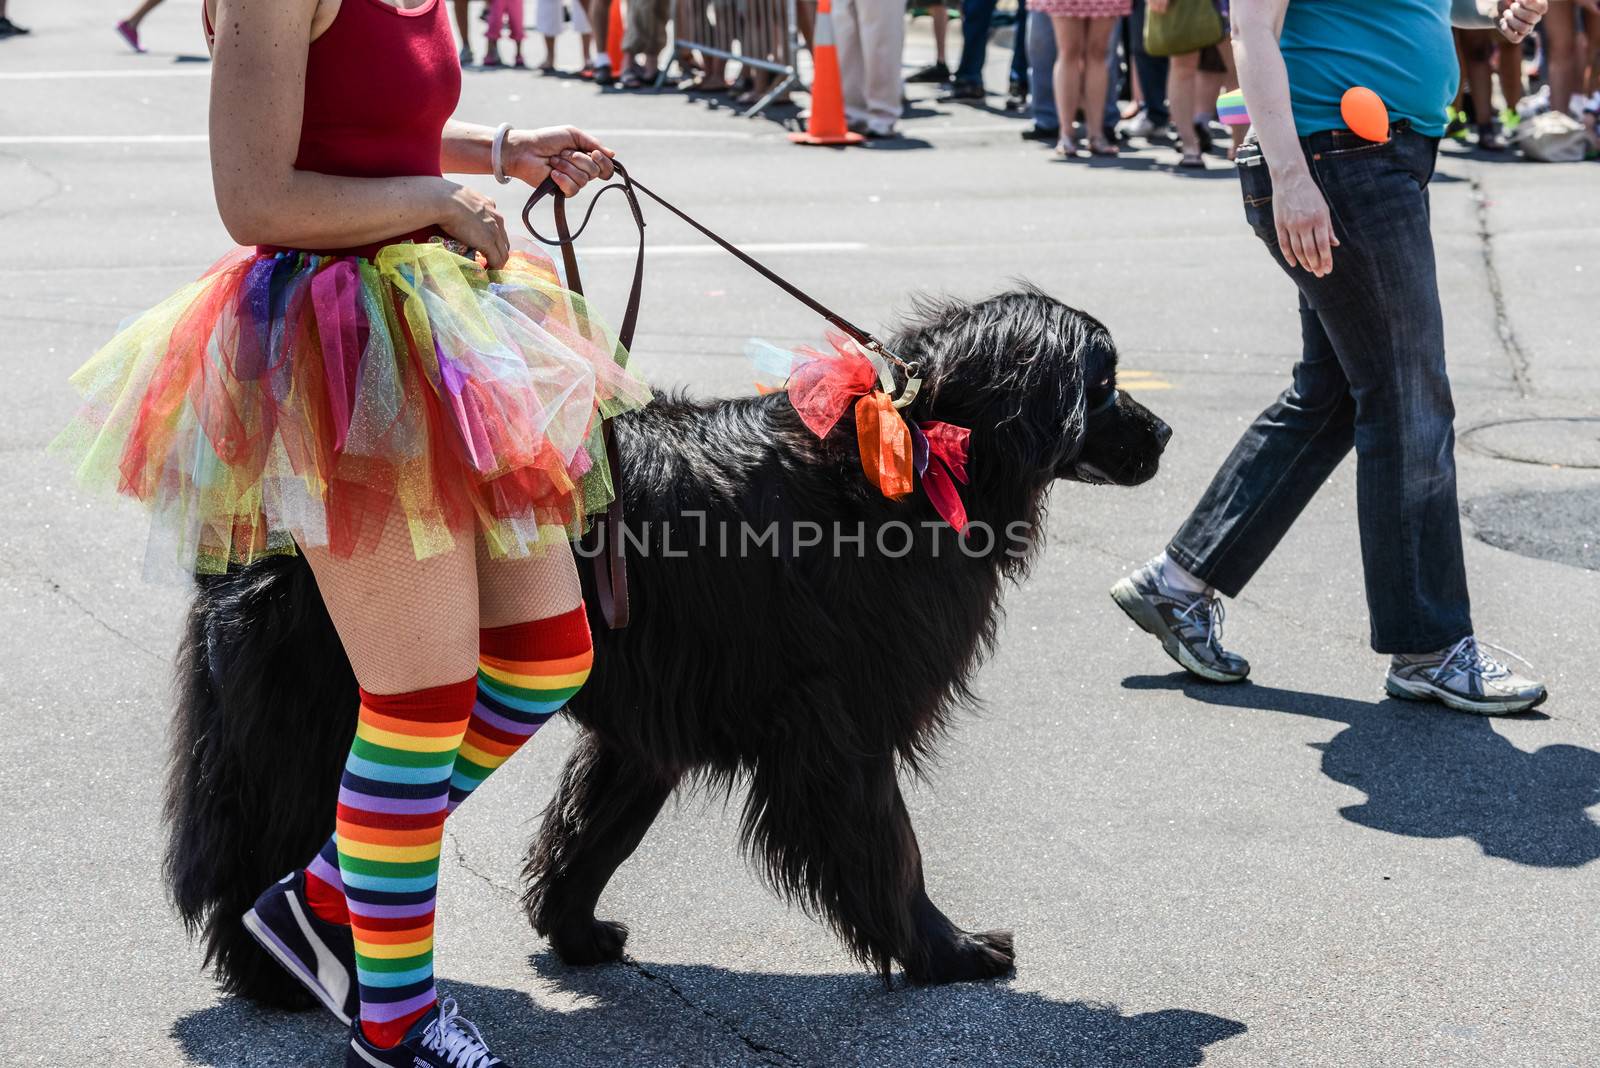 Minneapolis, MN, LGBT Pride Parade 2013 by IVYPHOTOS